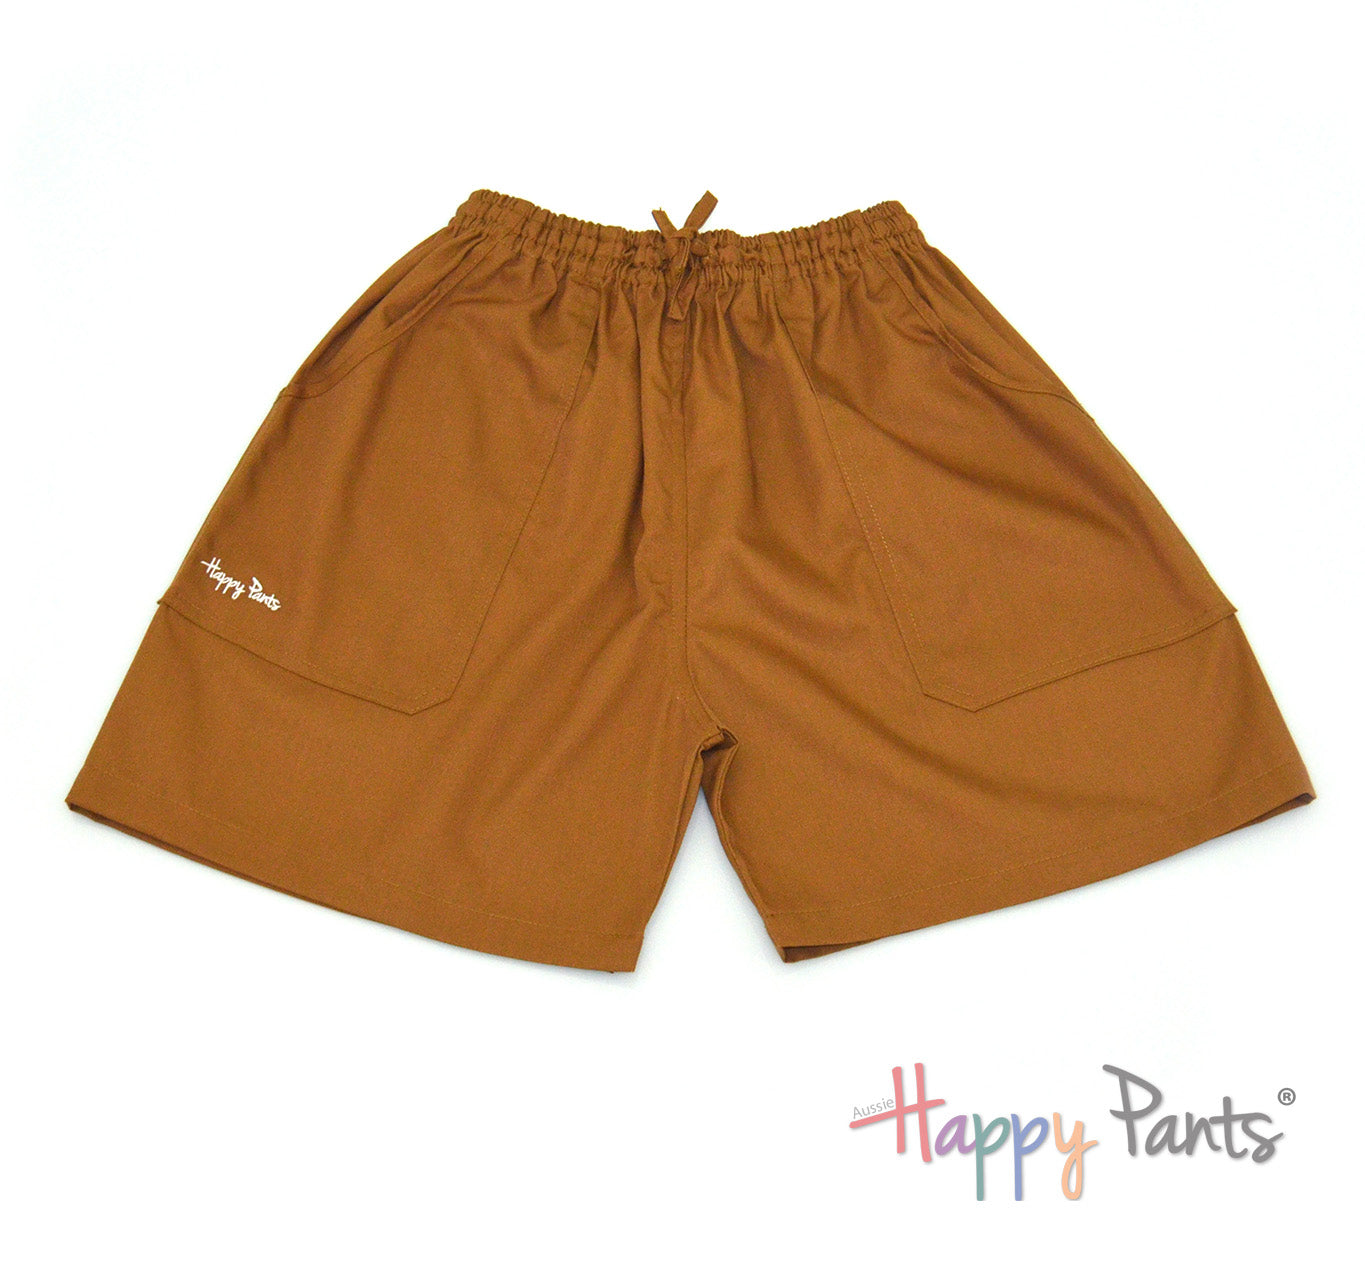 Caramel cotton shorts elastic waist summer Happy Pants fun and colourful clothes